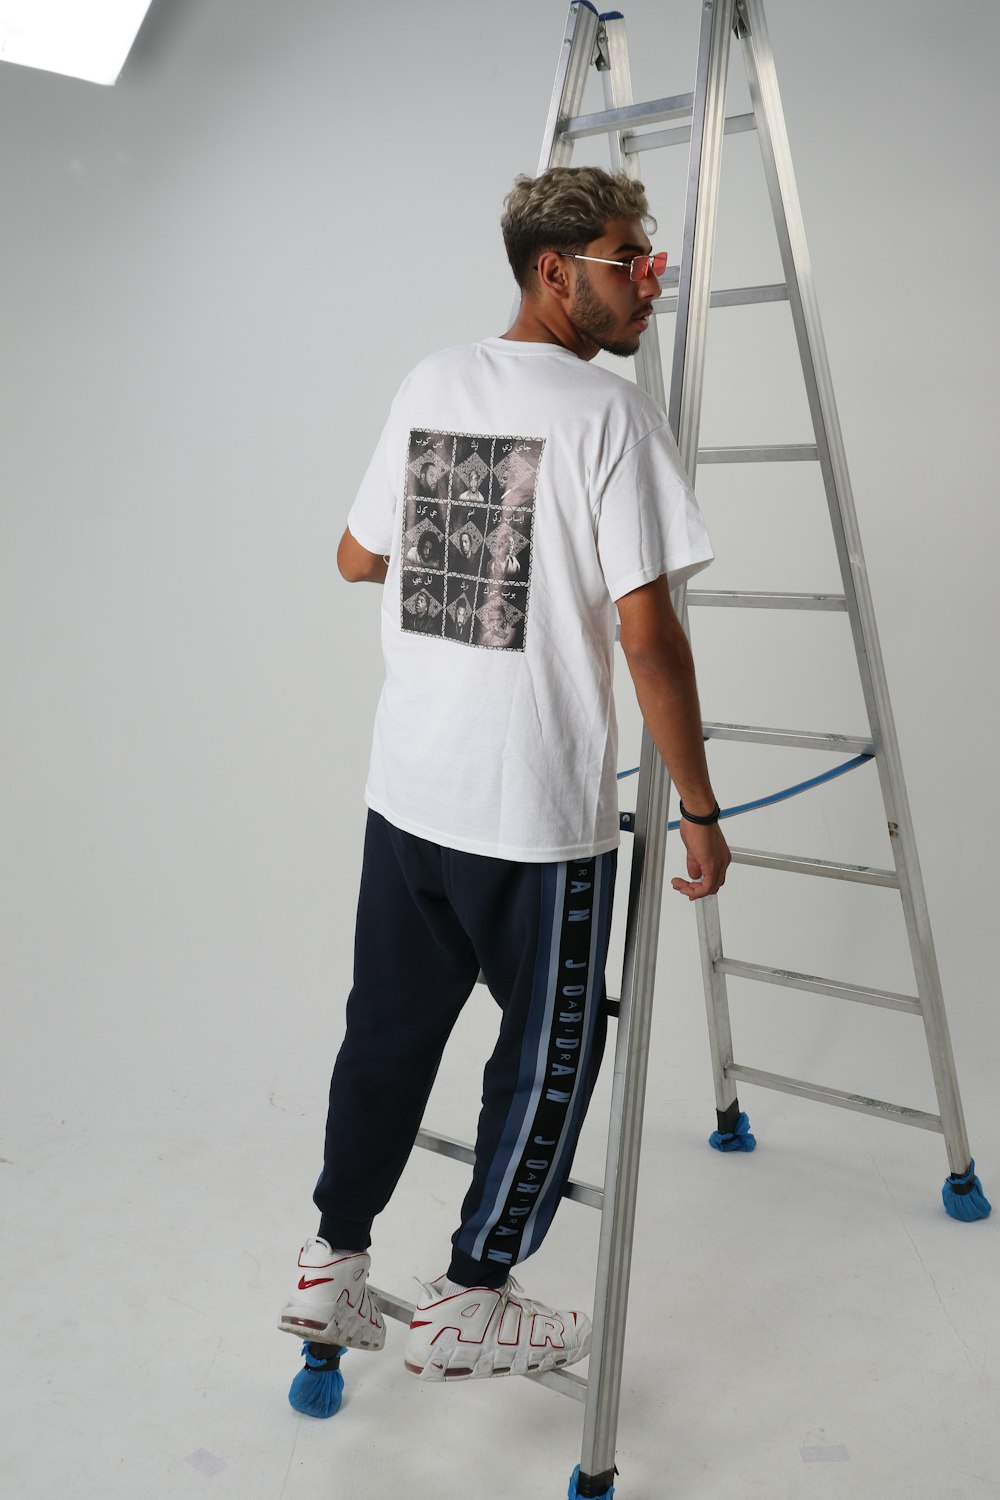 a man standing on a ladder wearing a white t - shirt